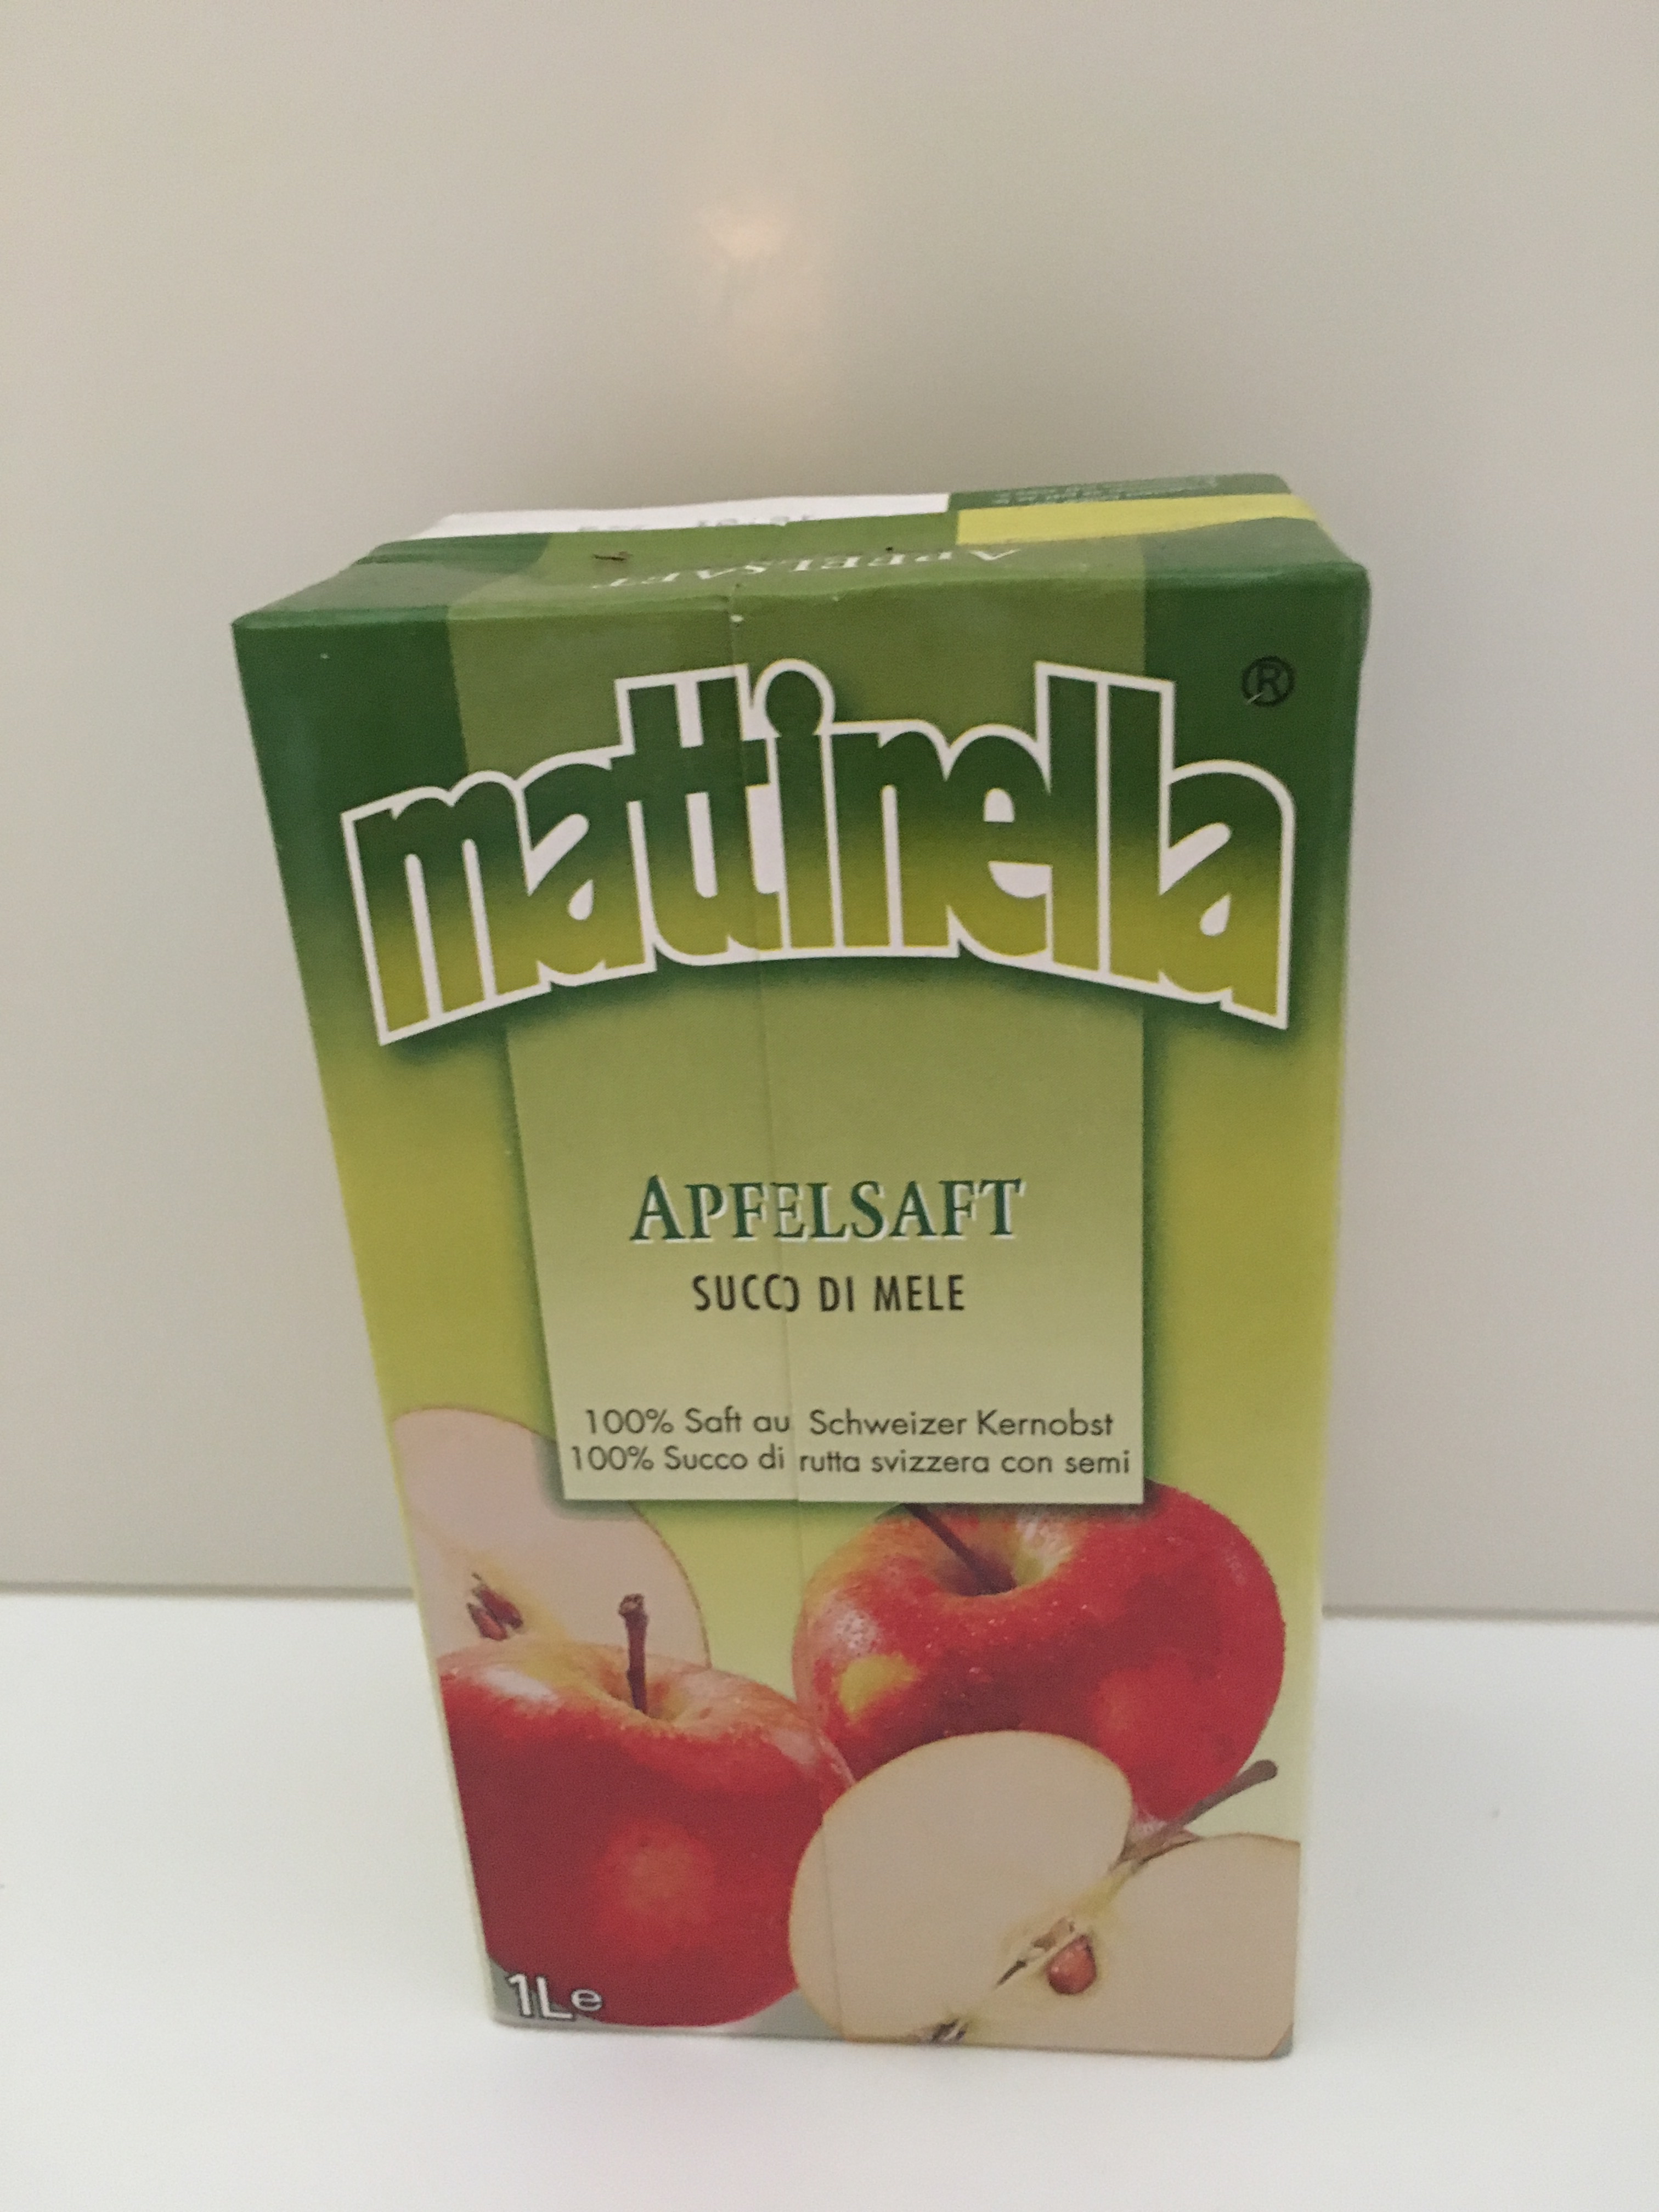 Getränke: Apfelsaft Mattinella ltr